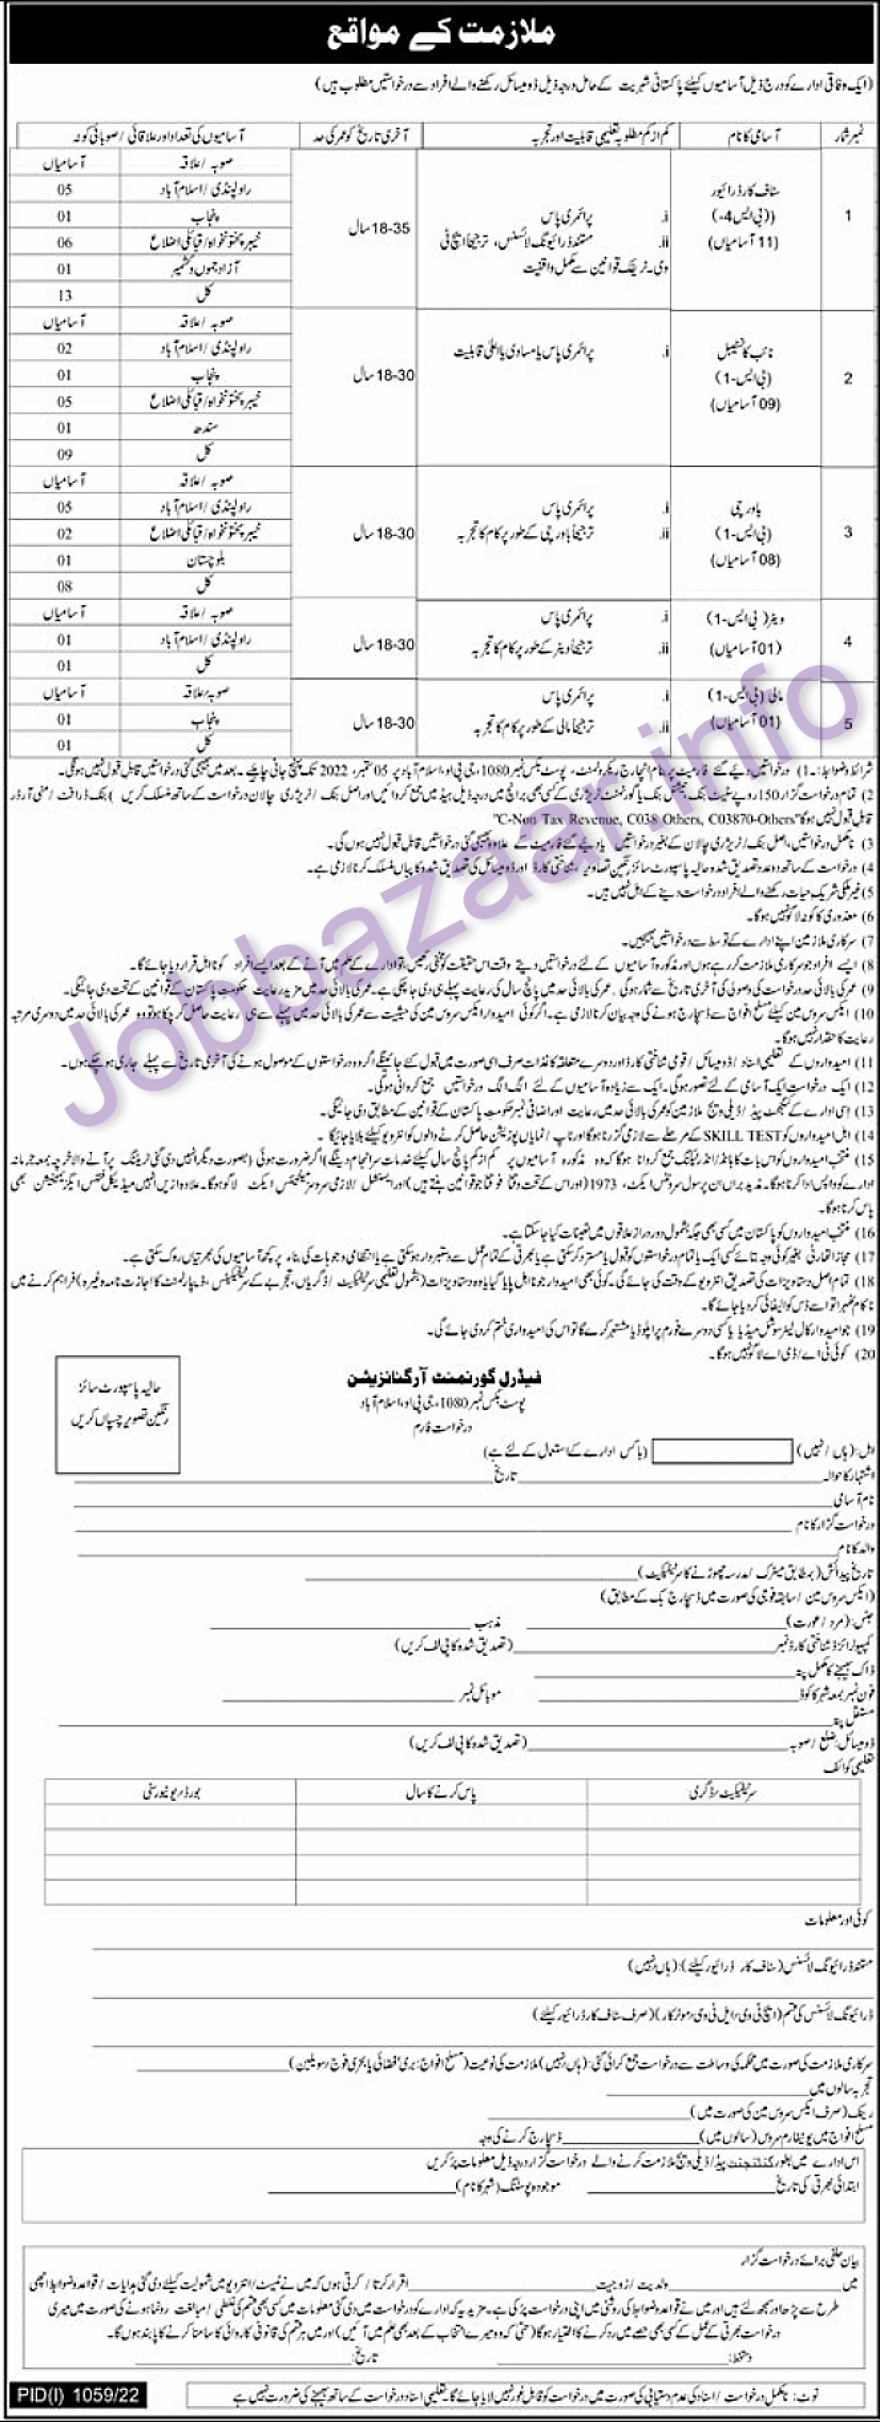 IB Intelligence Bureau Govt of Pakistan jobs 2022 Application Form